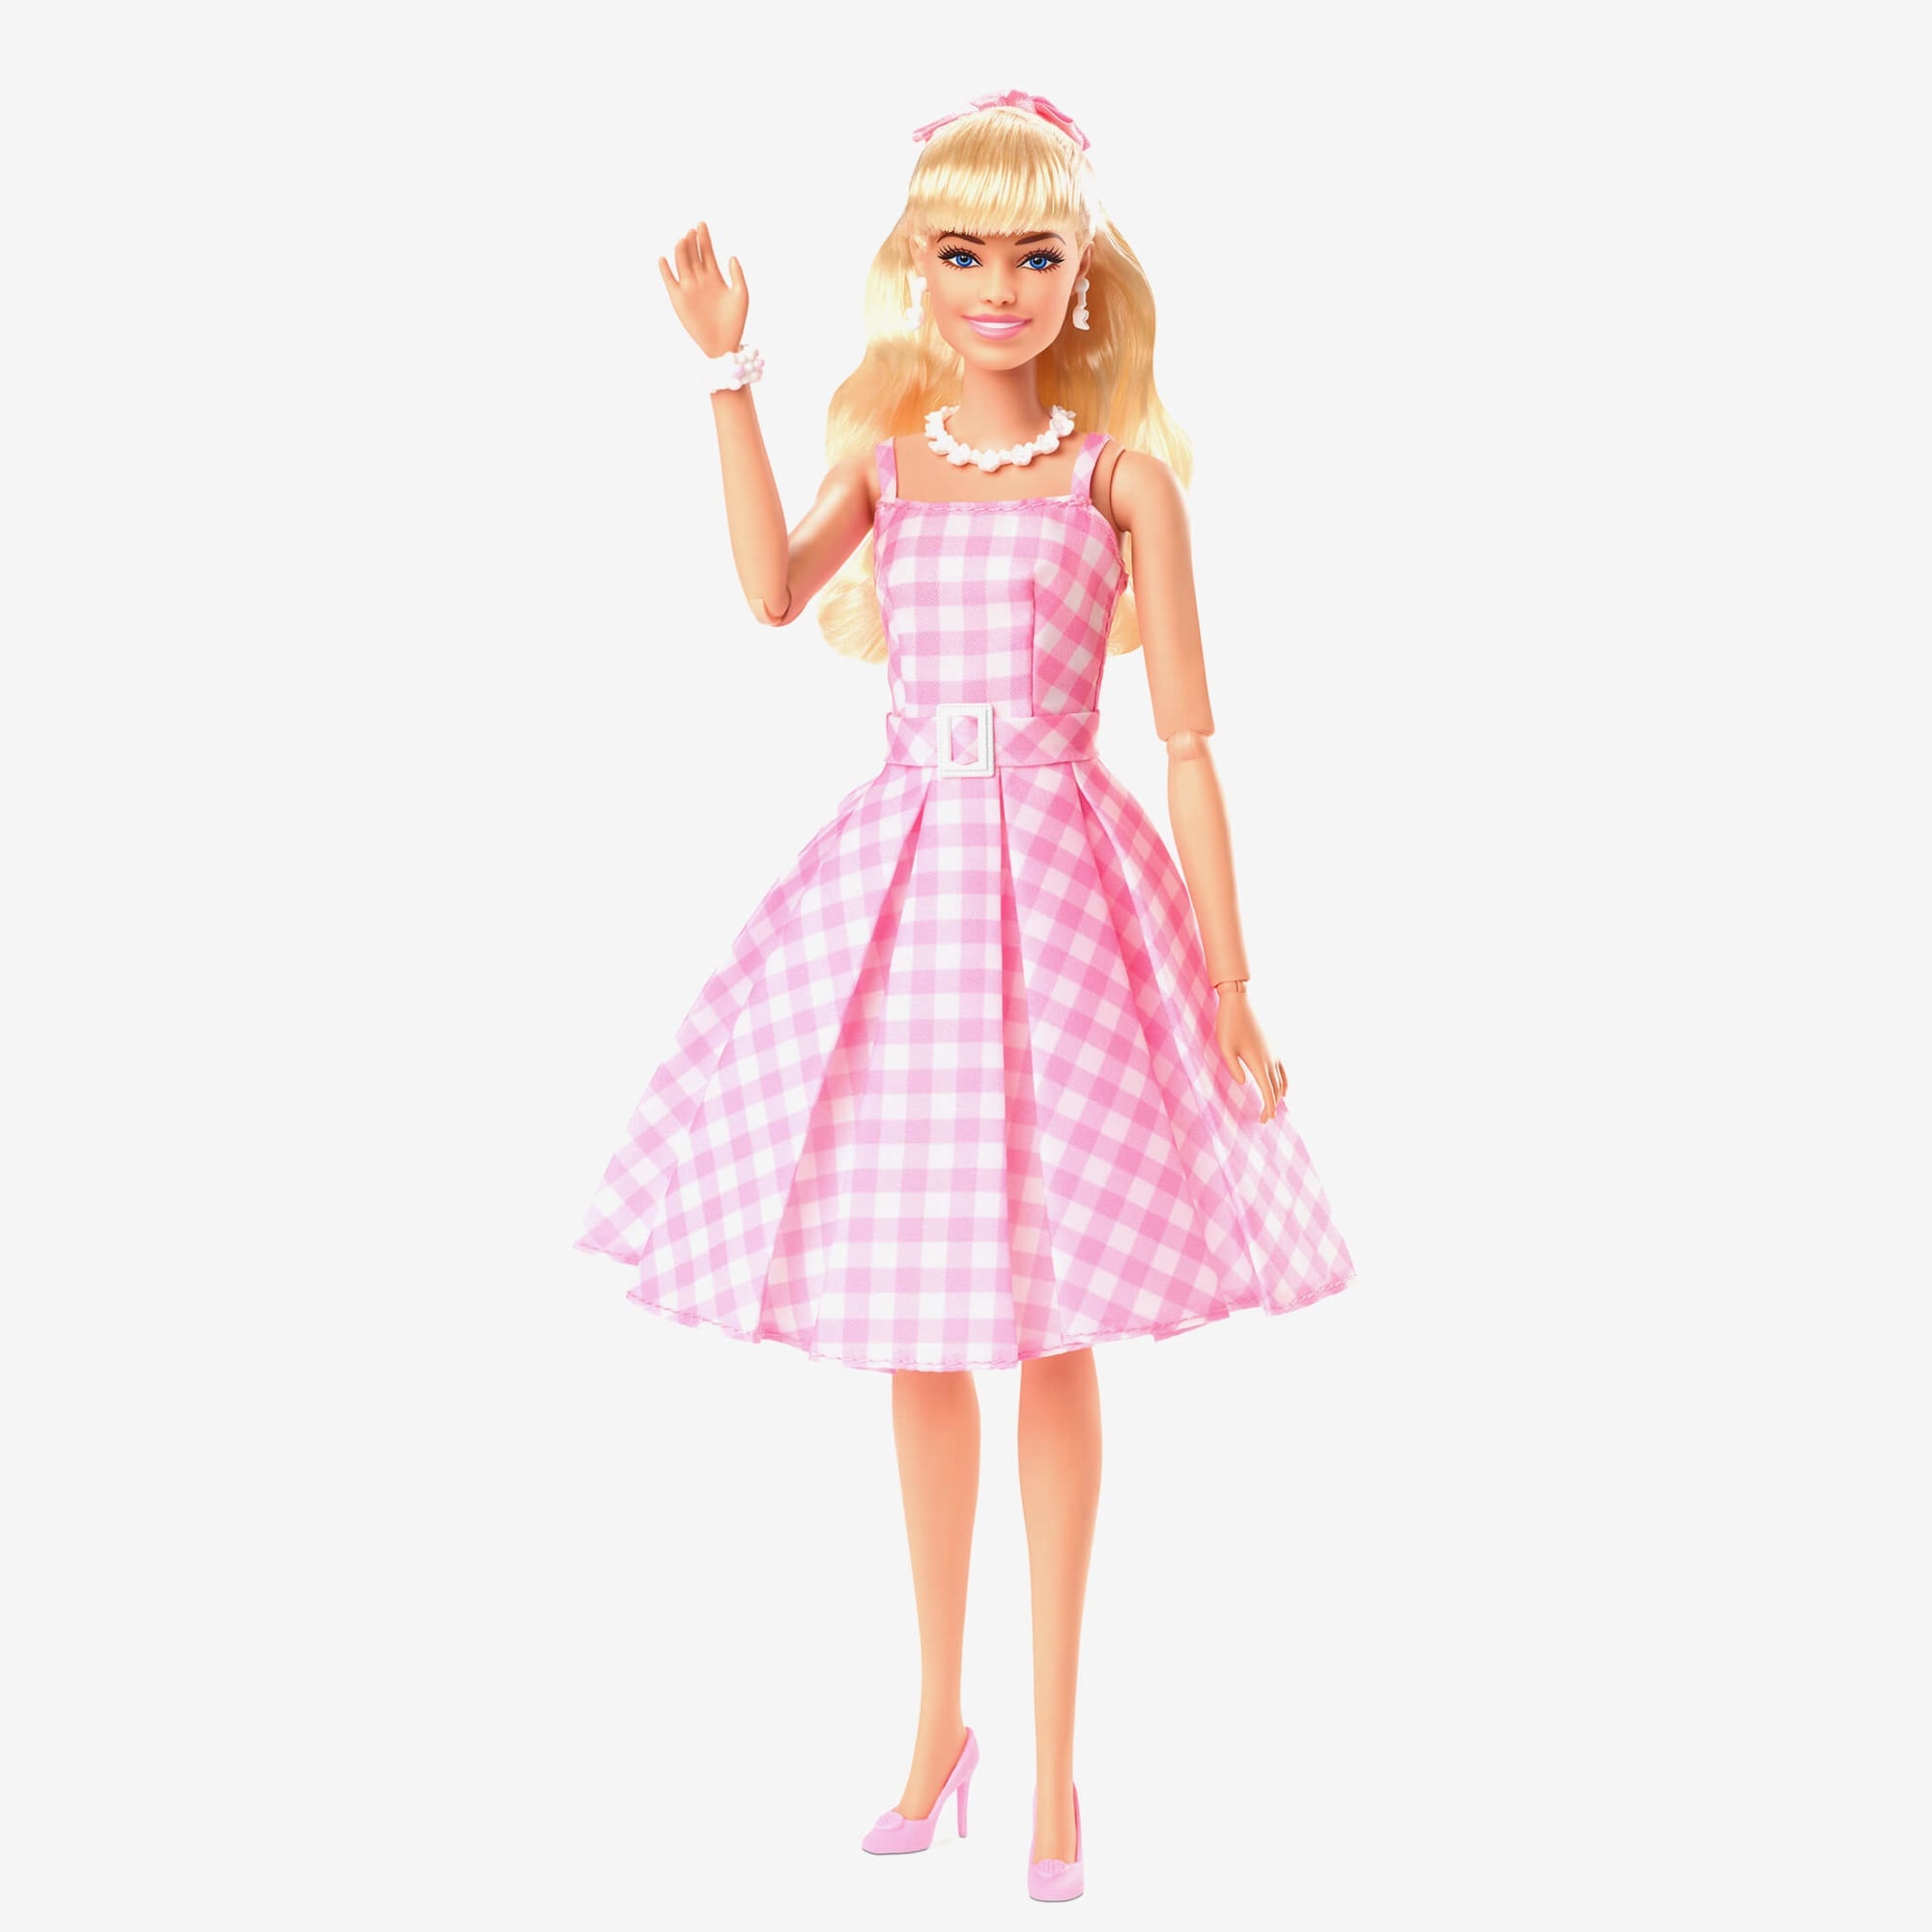 Art Deco Barbie - A Fresh Take on a Classic Icon